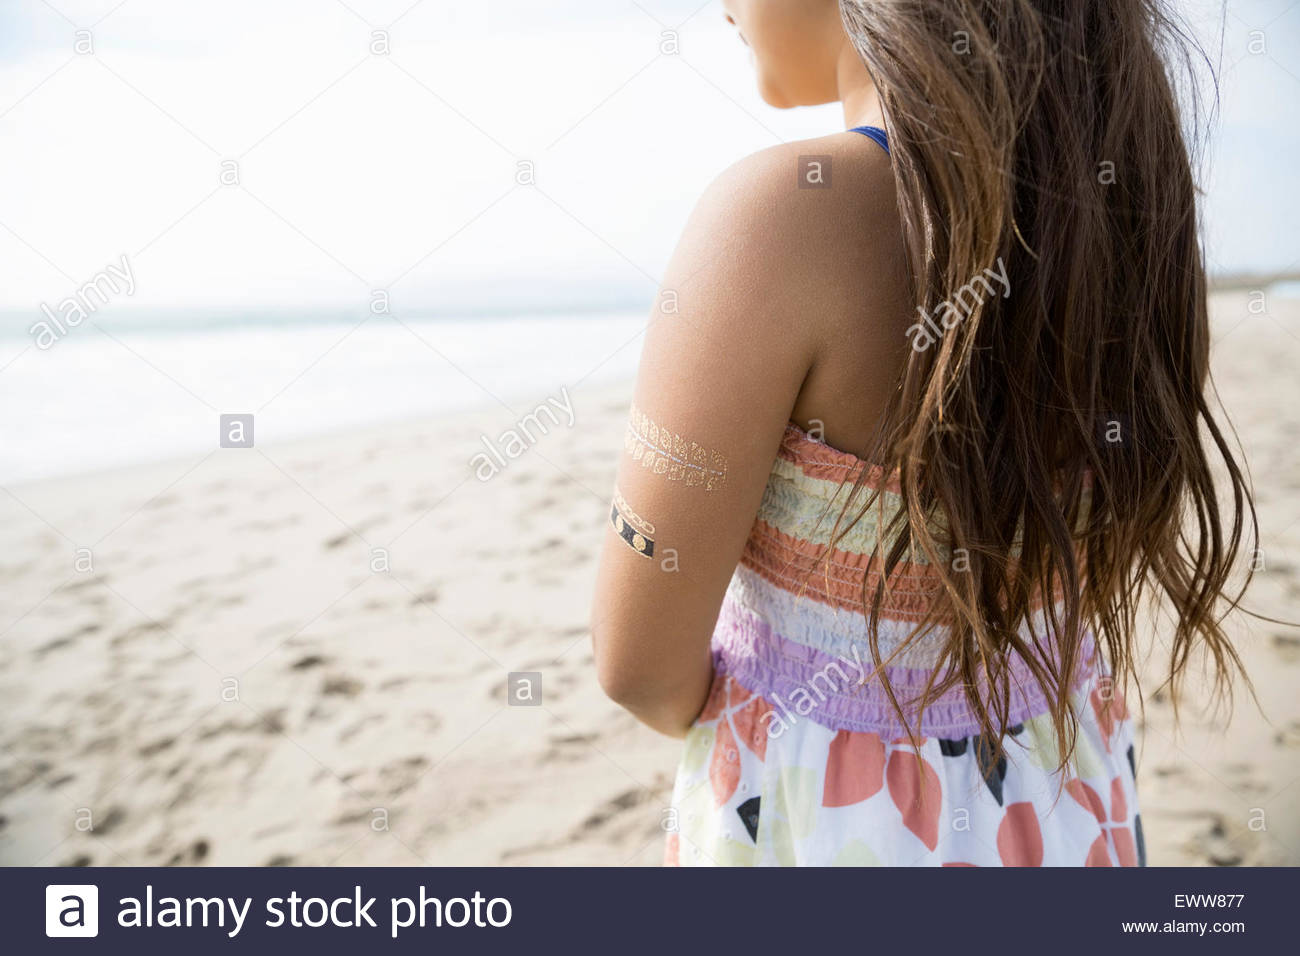 Pensive girl with henna tattoos on arm beach Stock Photo